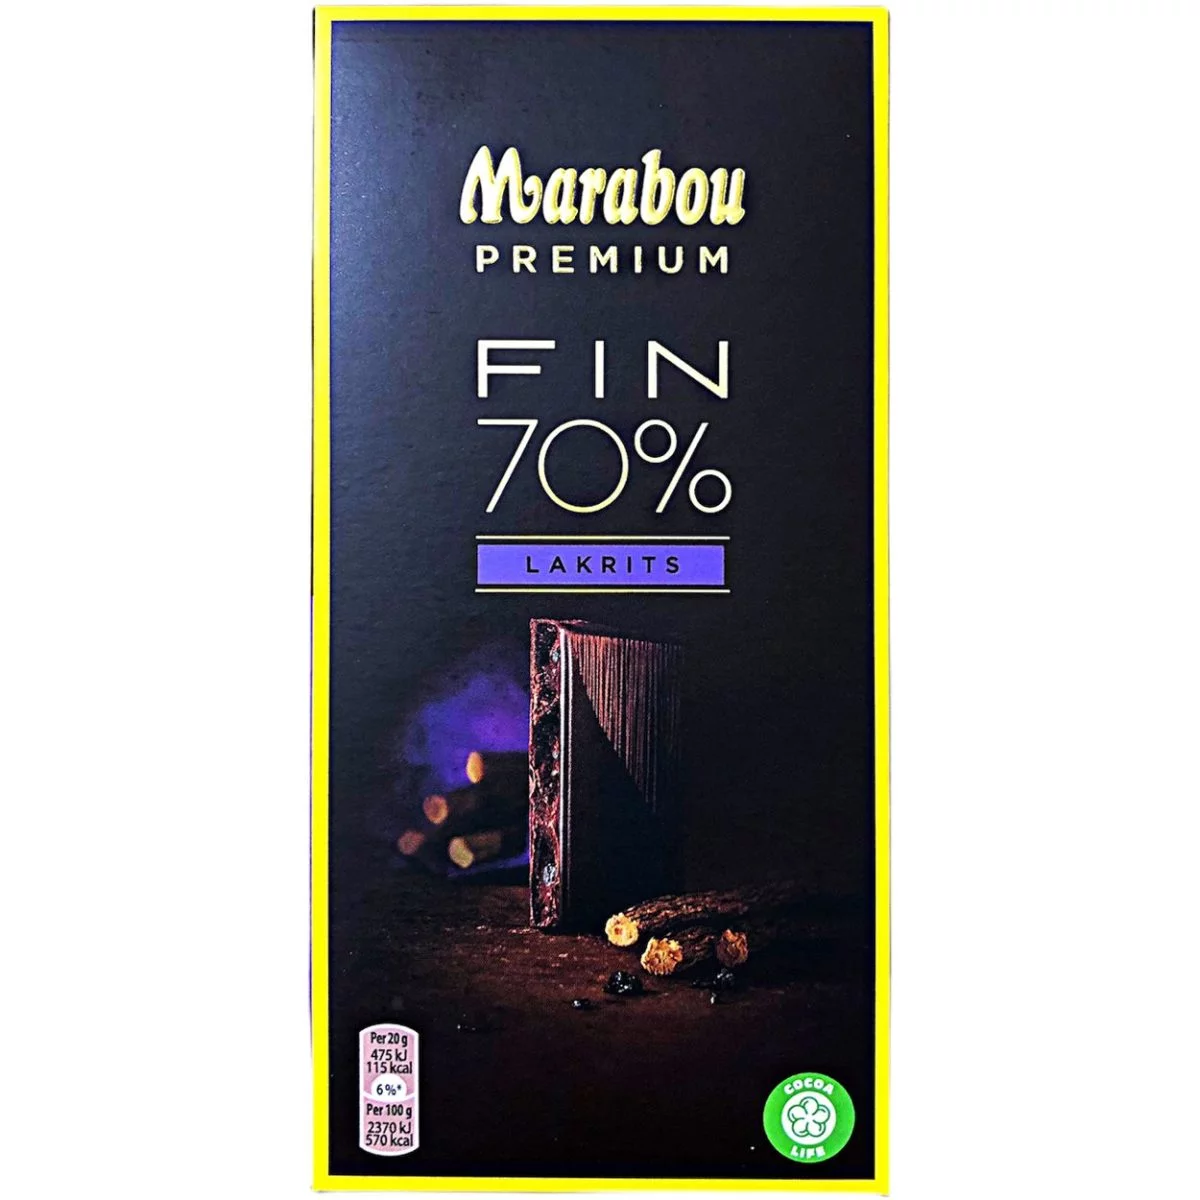 Marabou Premium FIN 70 % Lakrits (100g) 1